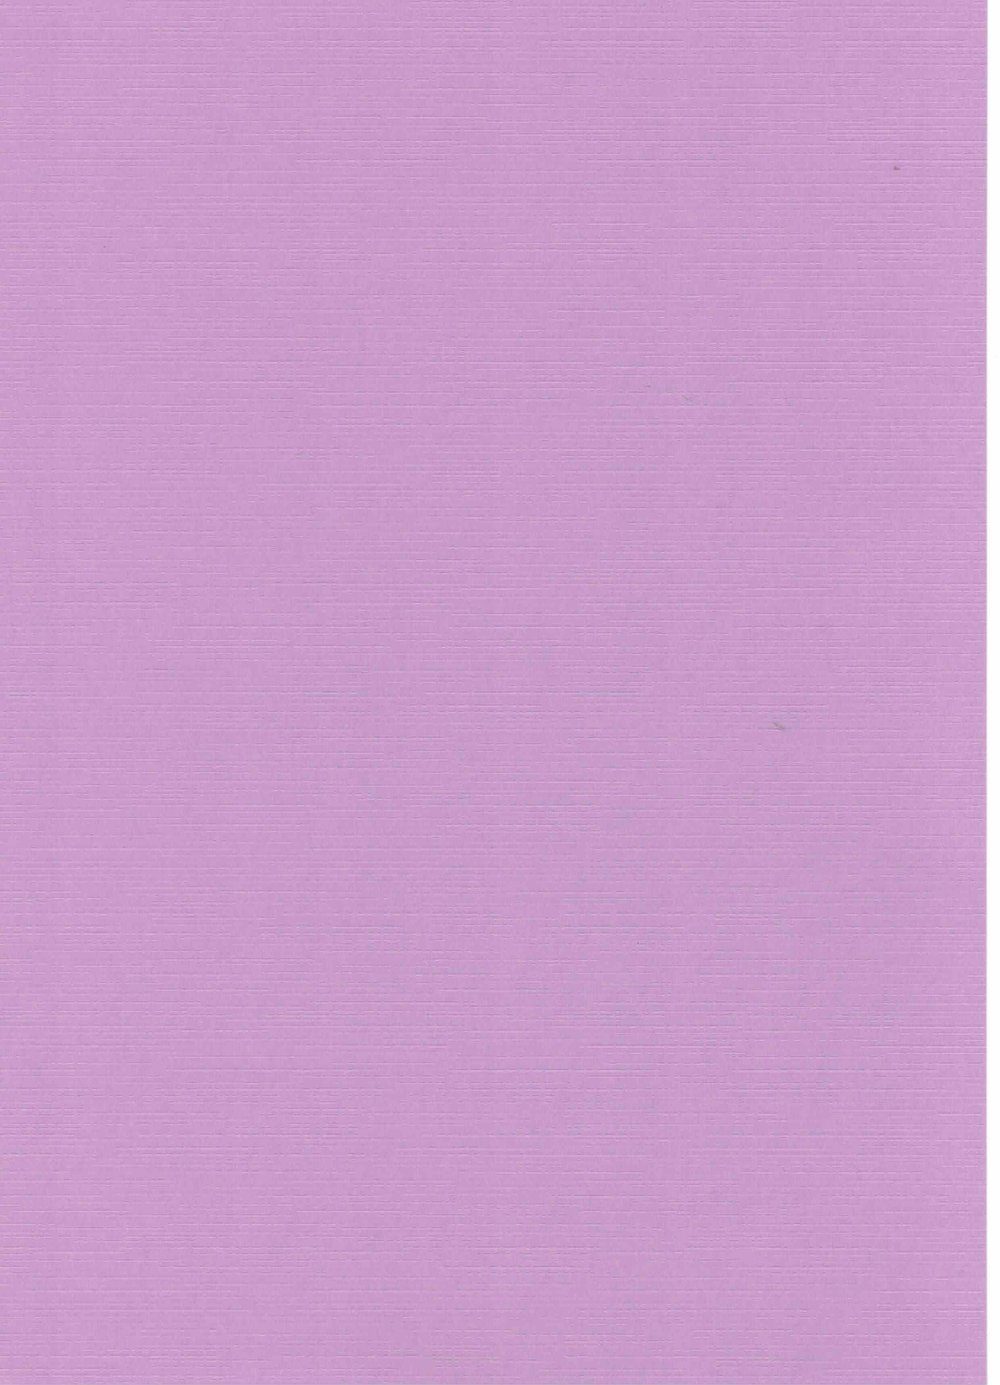 HobbyFun Zeichenpapier Leinen-Karton A4 250g/m² 5 Blatt/Pckg. Lavendel